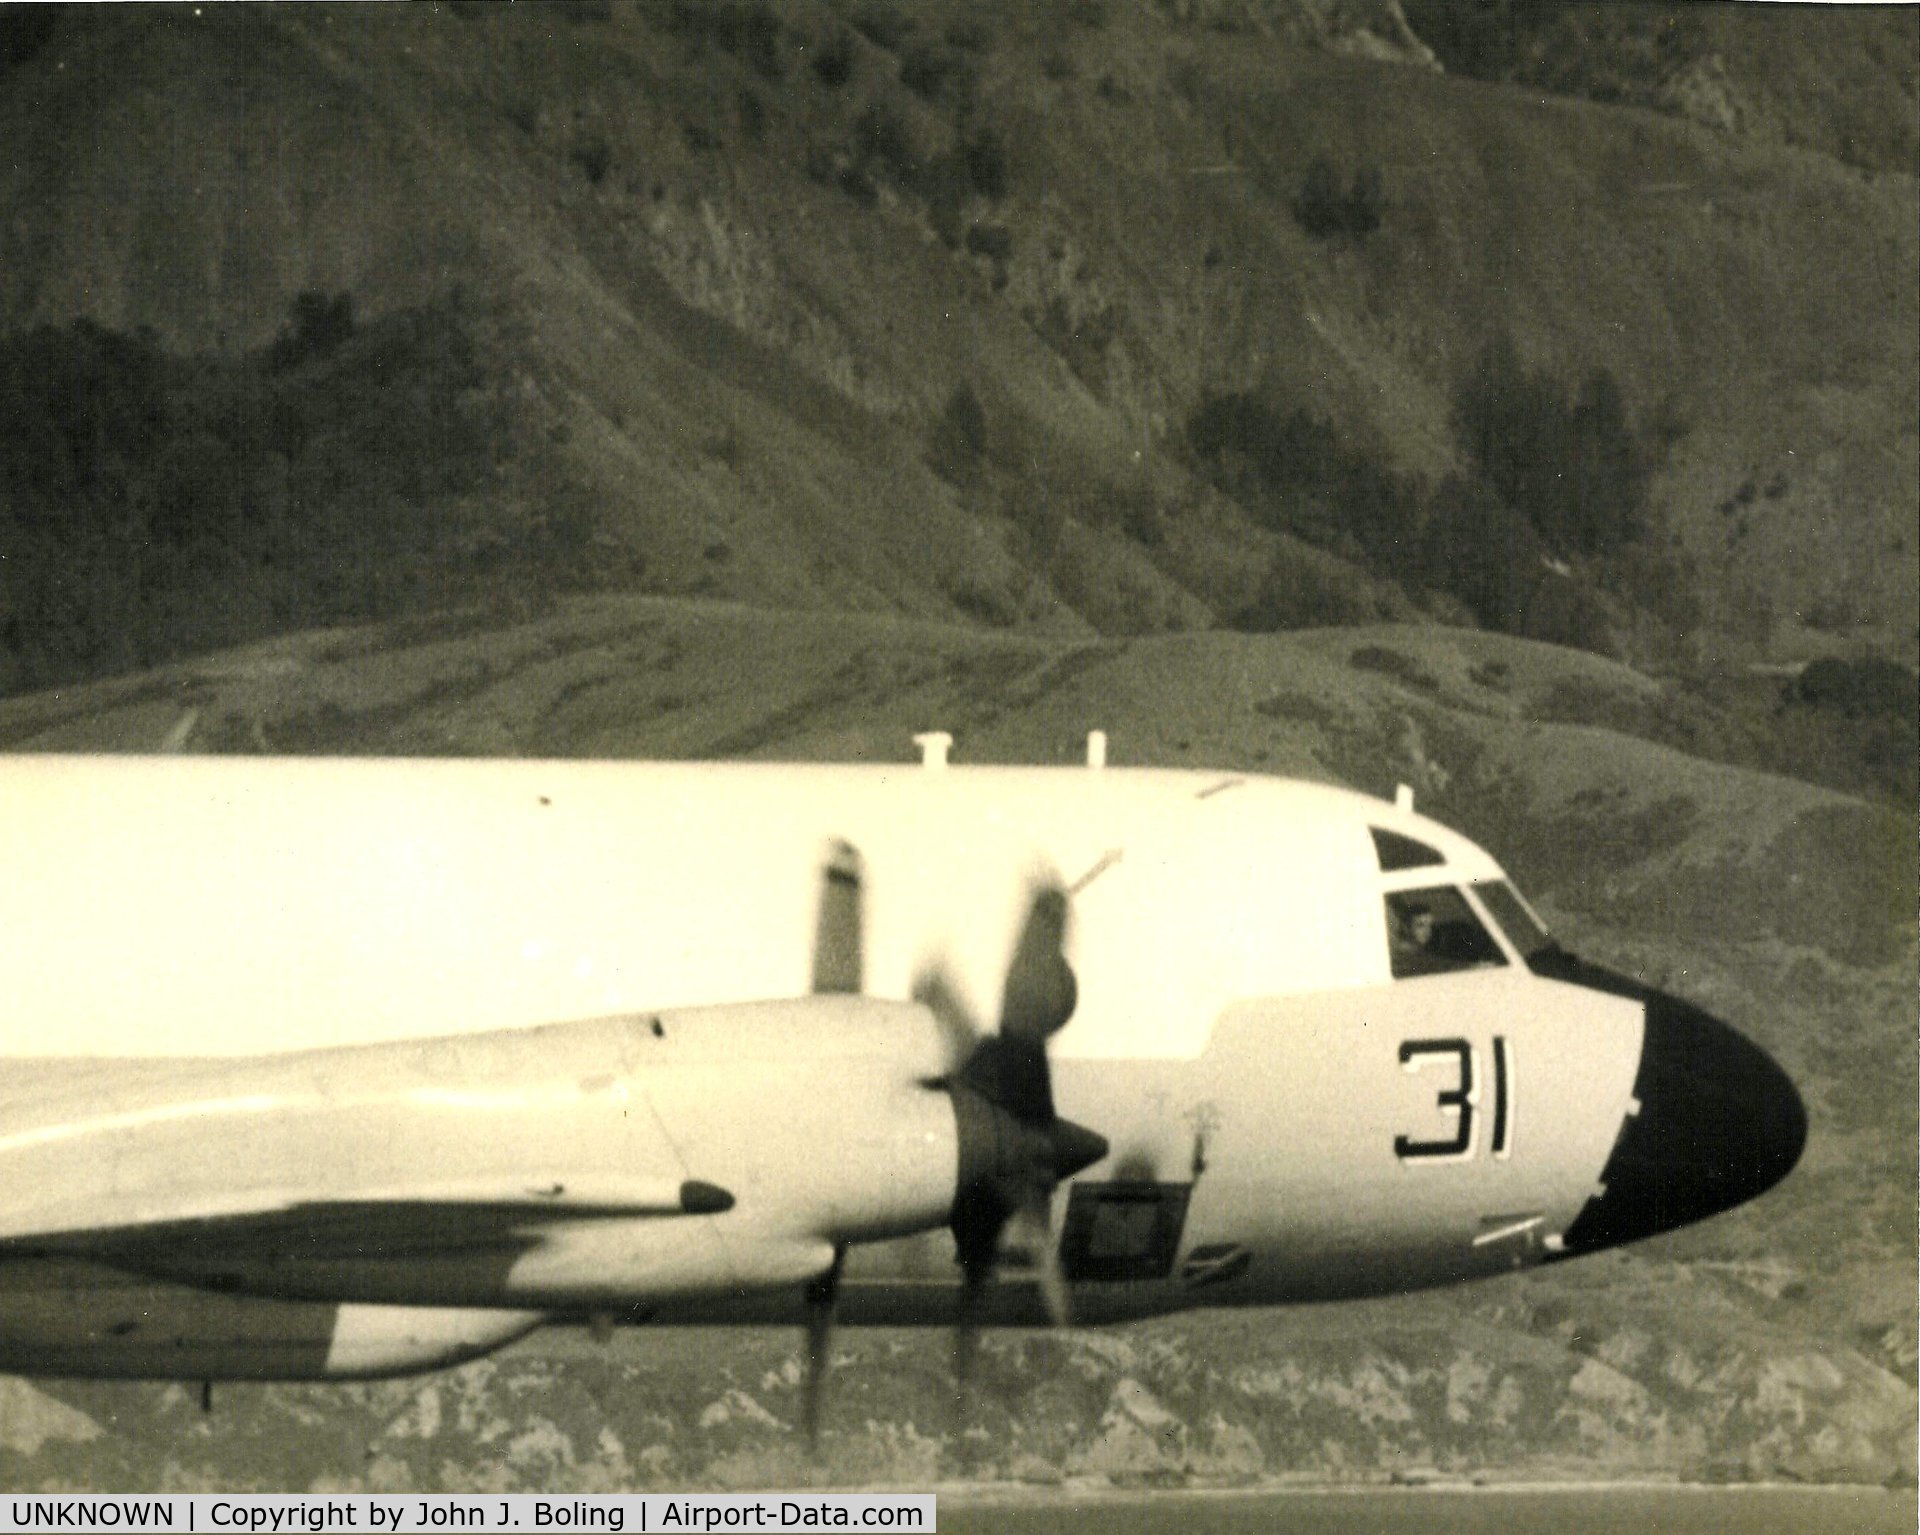 UNKNOWN, Lockheed P-3 Orion C/N unknown, P-3 